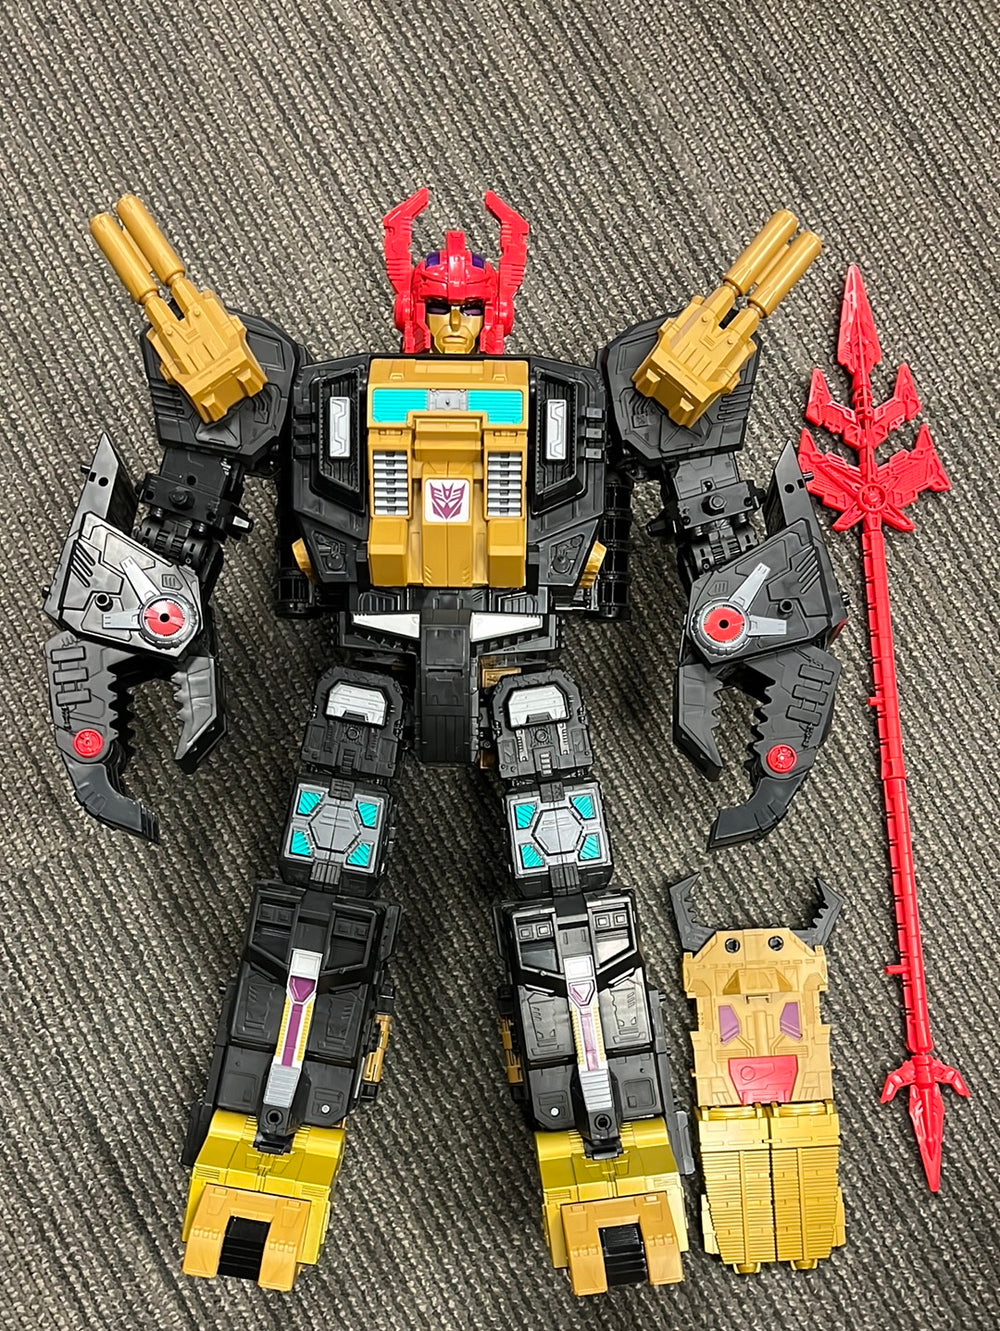 Transformers Titan class Black Zarak